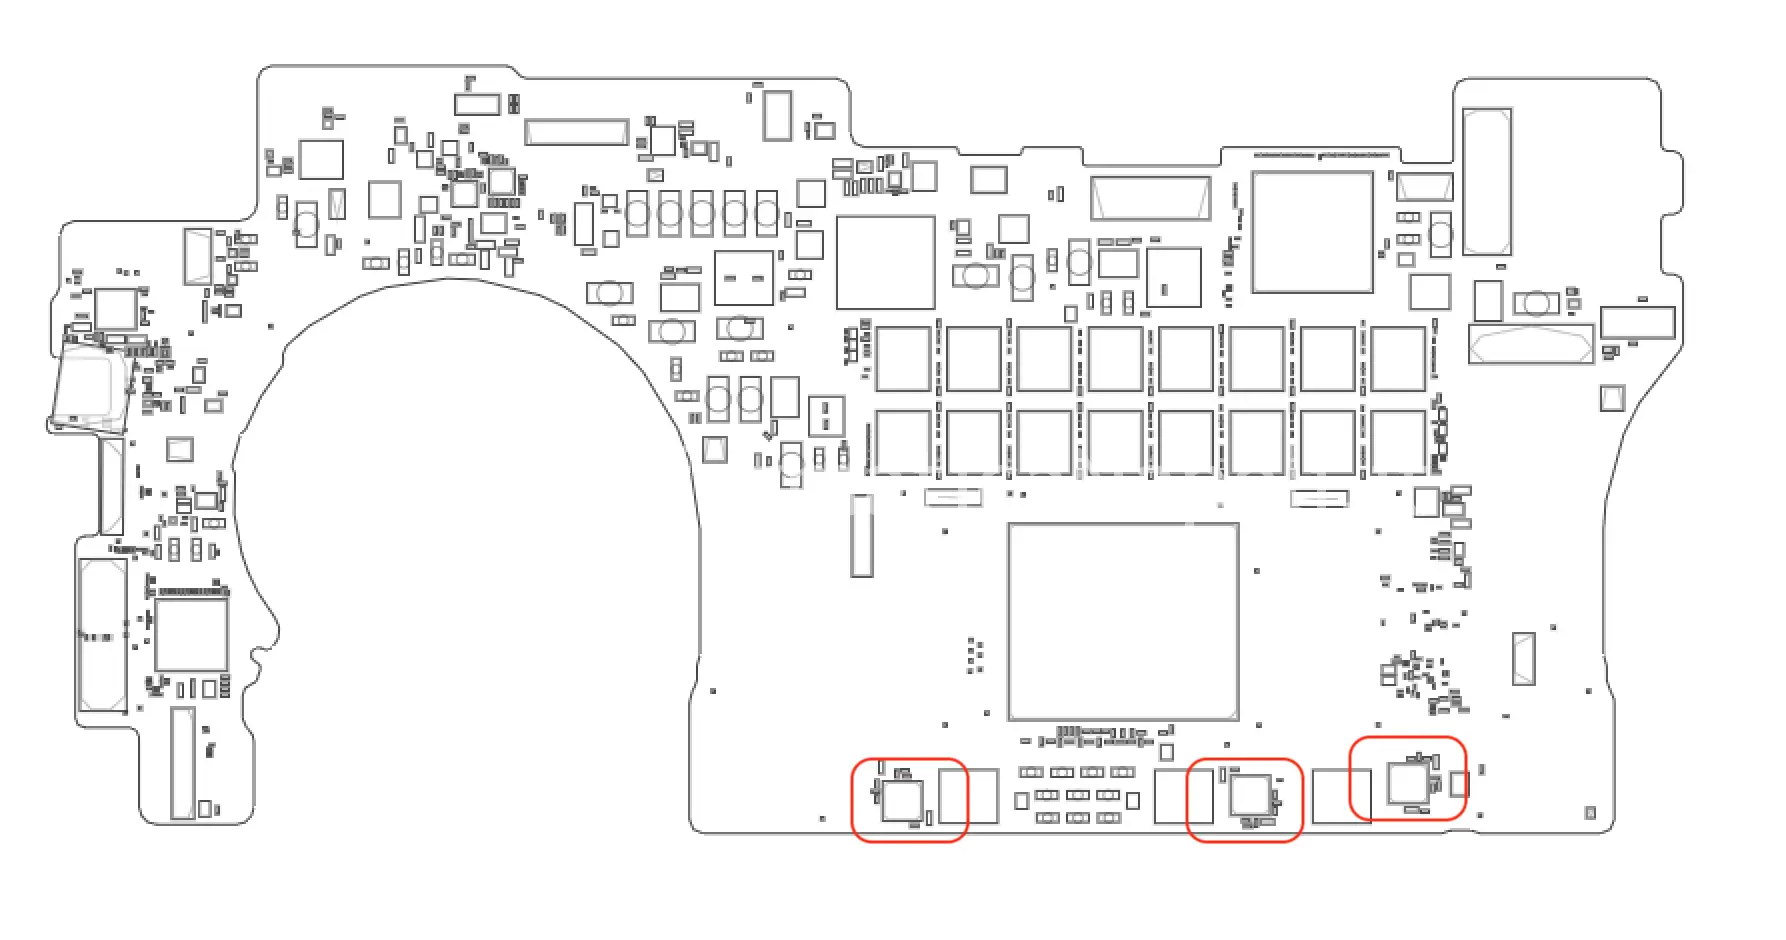 problema spegnimento improvviso macbook pro 15 retina 820-3662-A 2014 fasi synchronous buck DC-DC